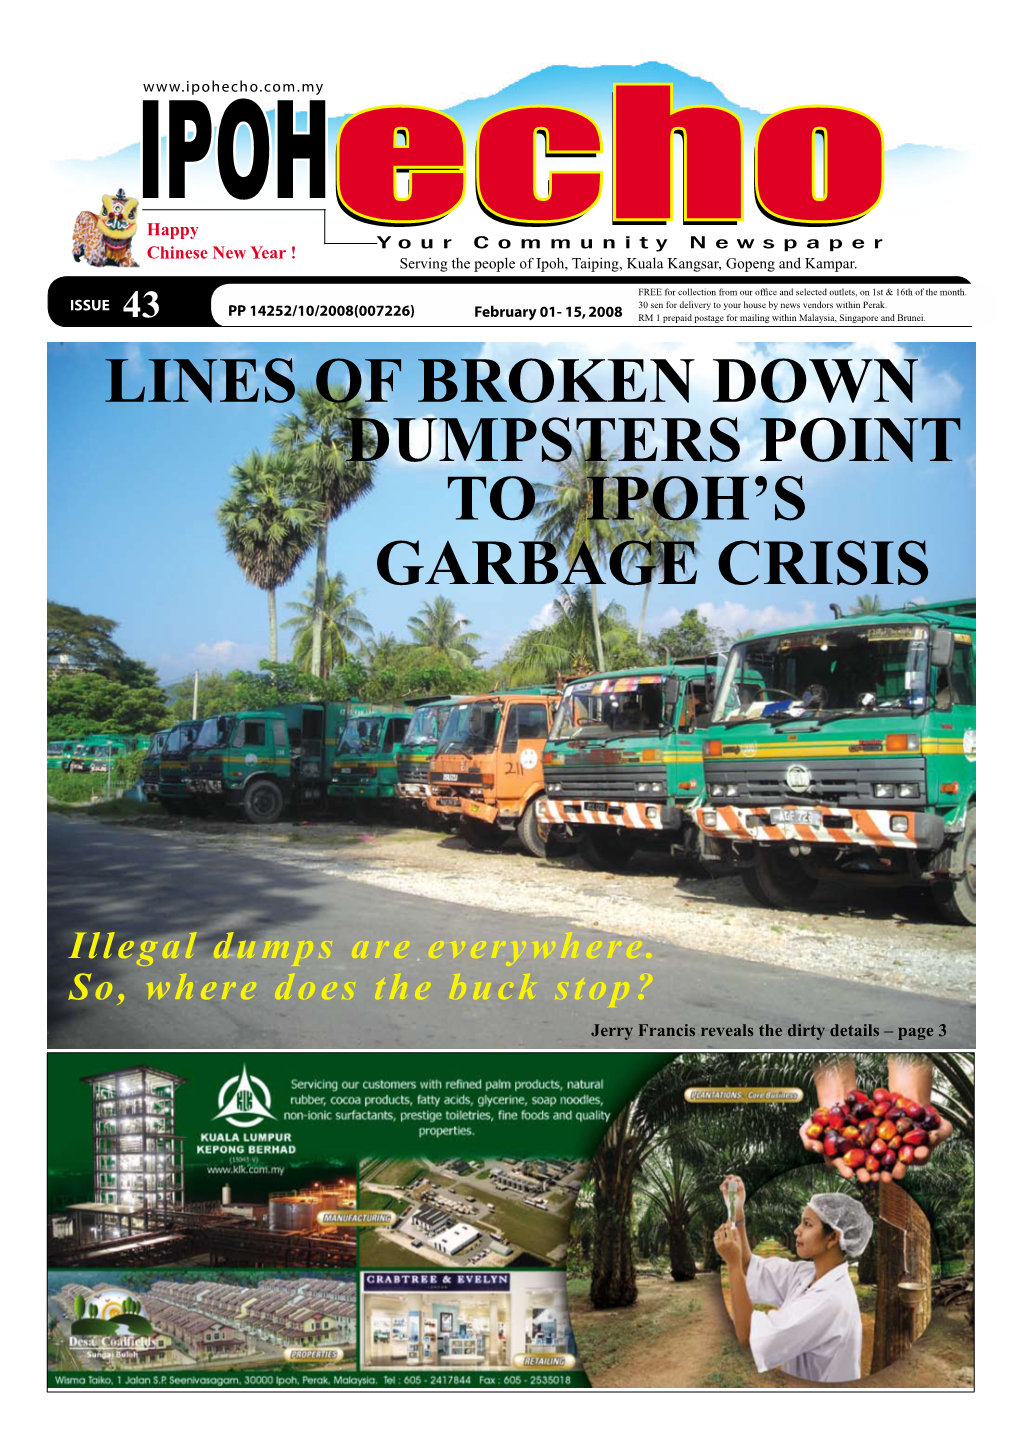 Lines of Broken Down Garbage Crisis to Ipoh's